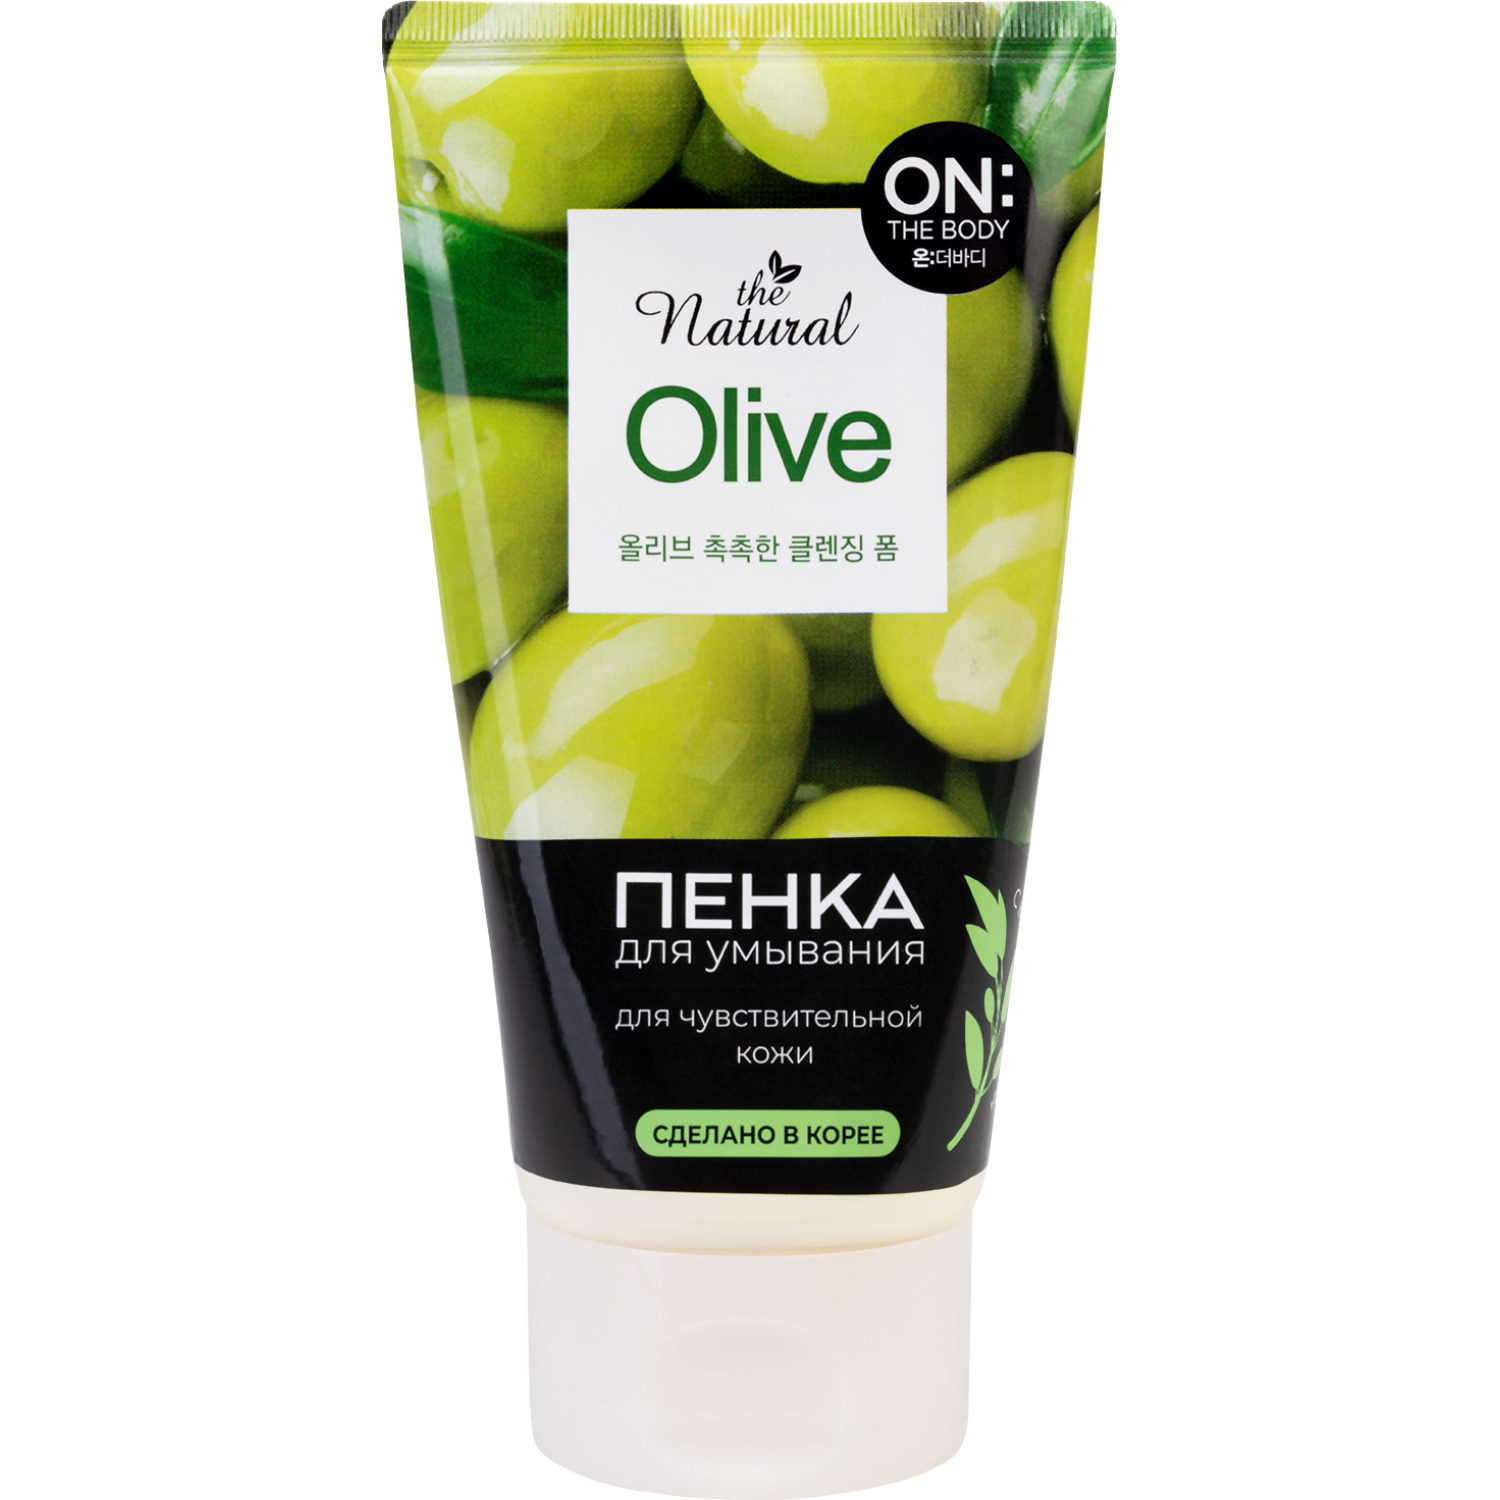 Пенка для умывания ON THE BODY Natural Olive с оливой, очищающая, натуральная, 120 мл пенка для умывания so natural